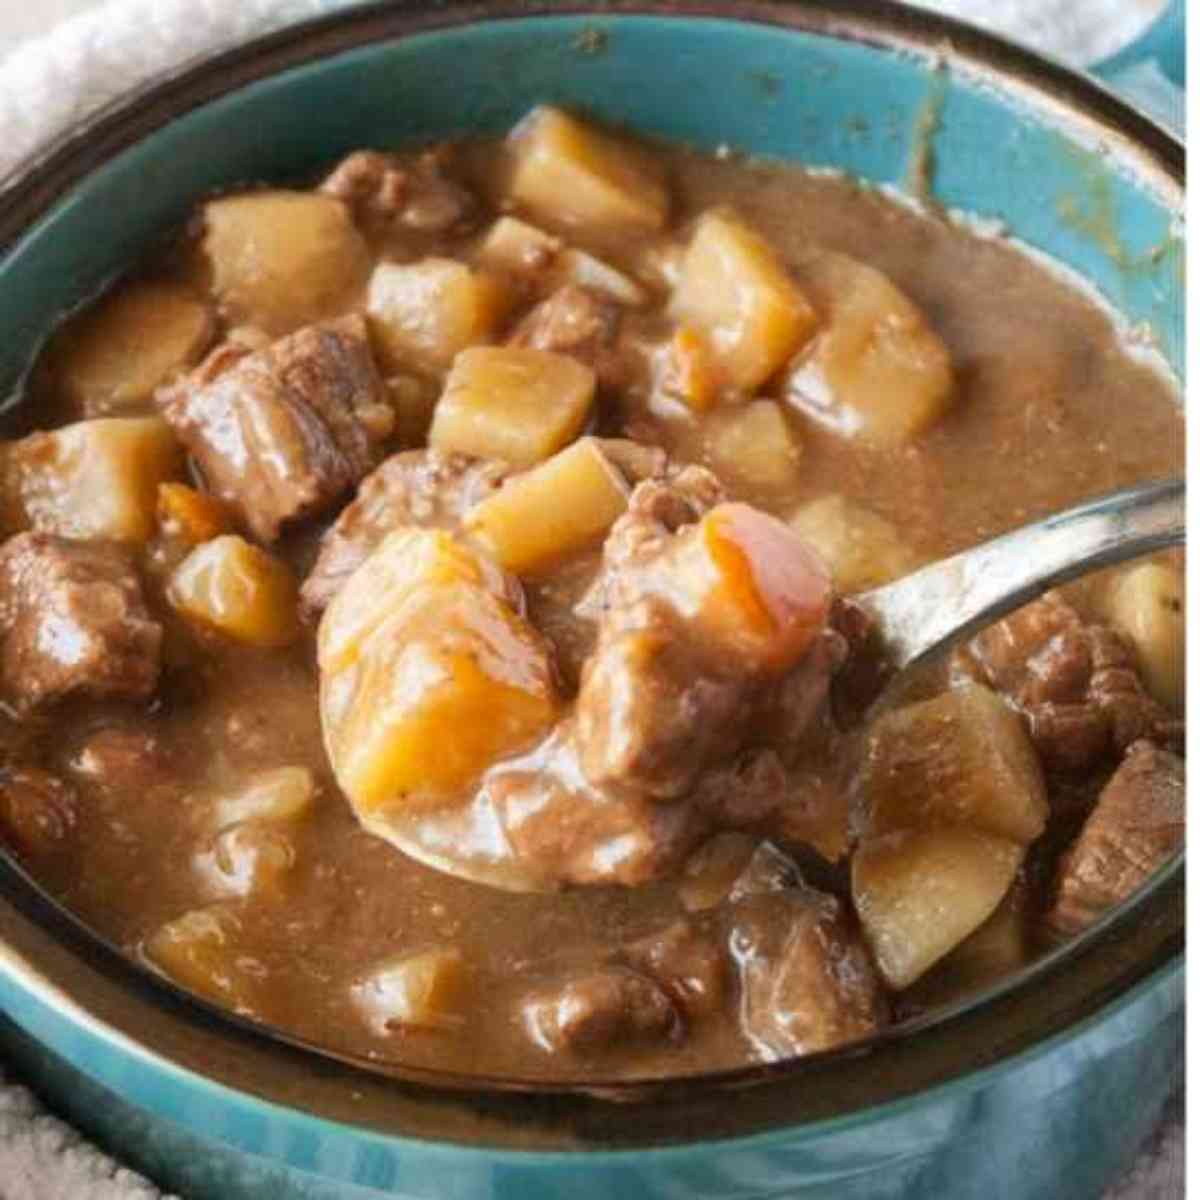 Big bowl of beef stew